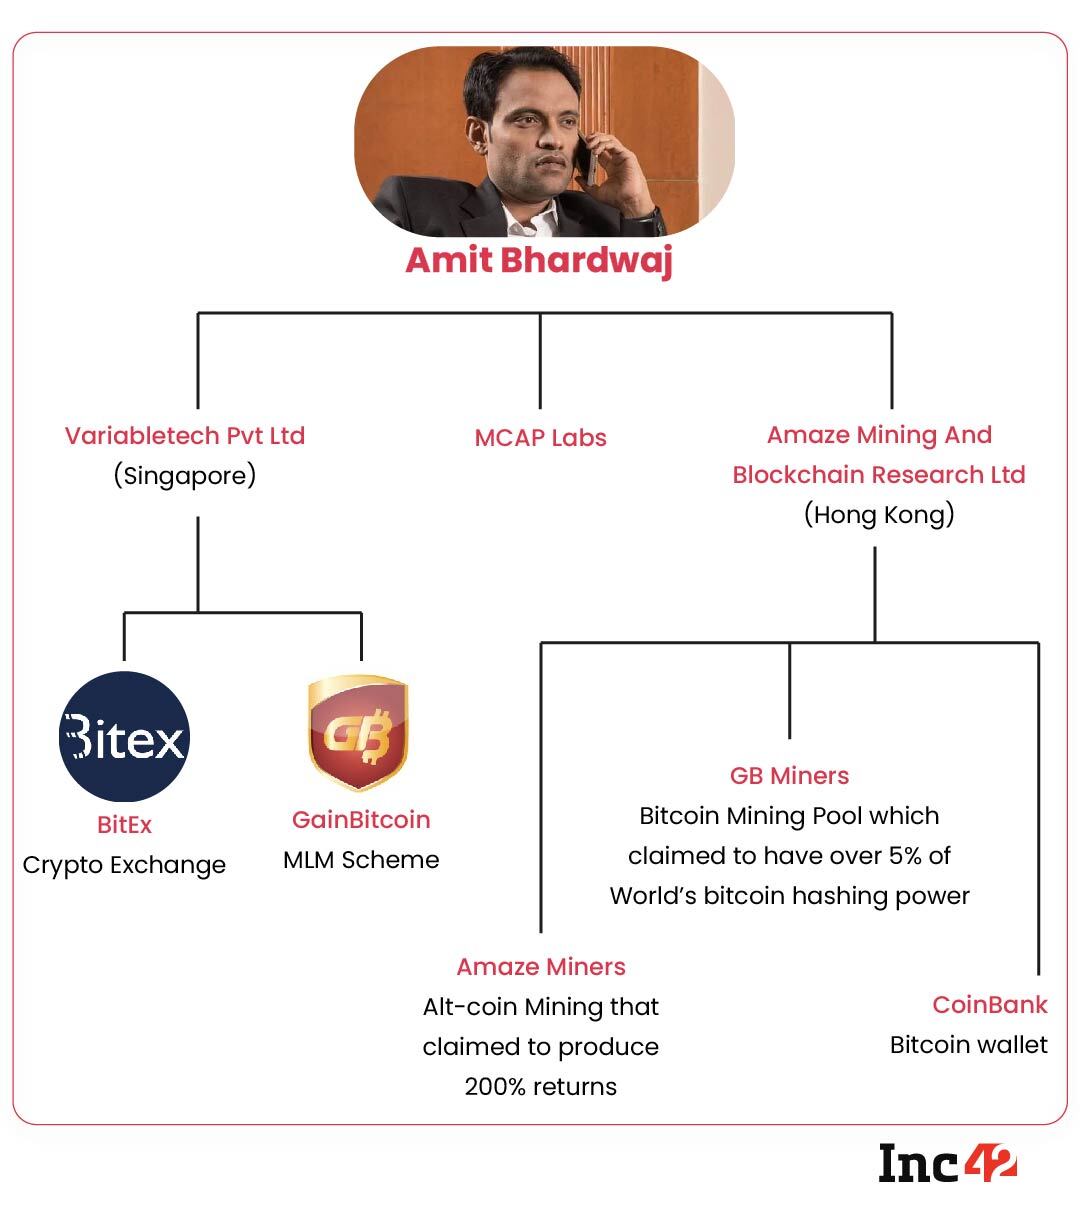 Amit Bhardwaj's Death - Who Will Return The Lost $2.7 Bn From His Ponzi Scheme